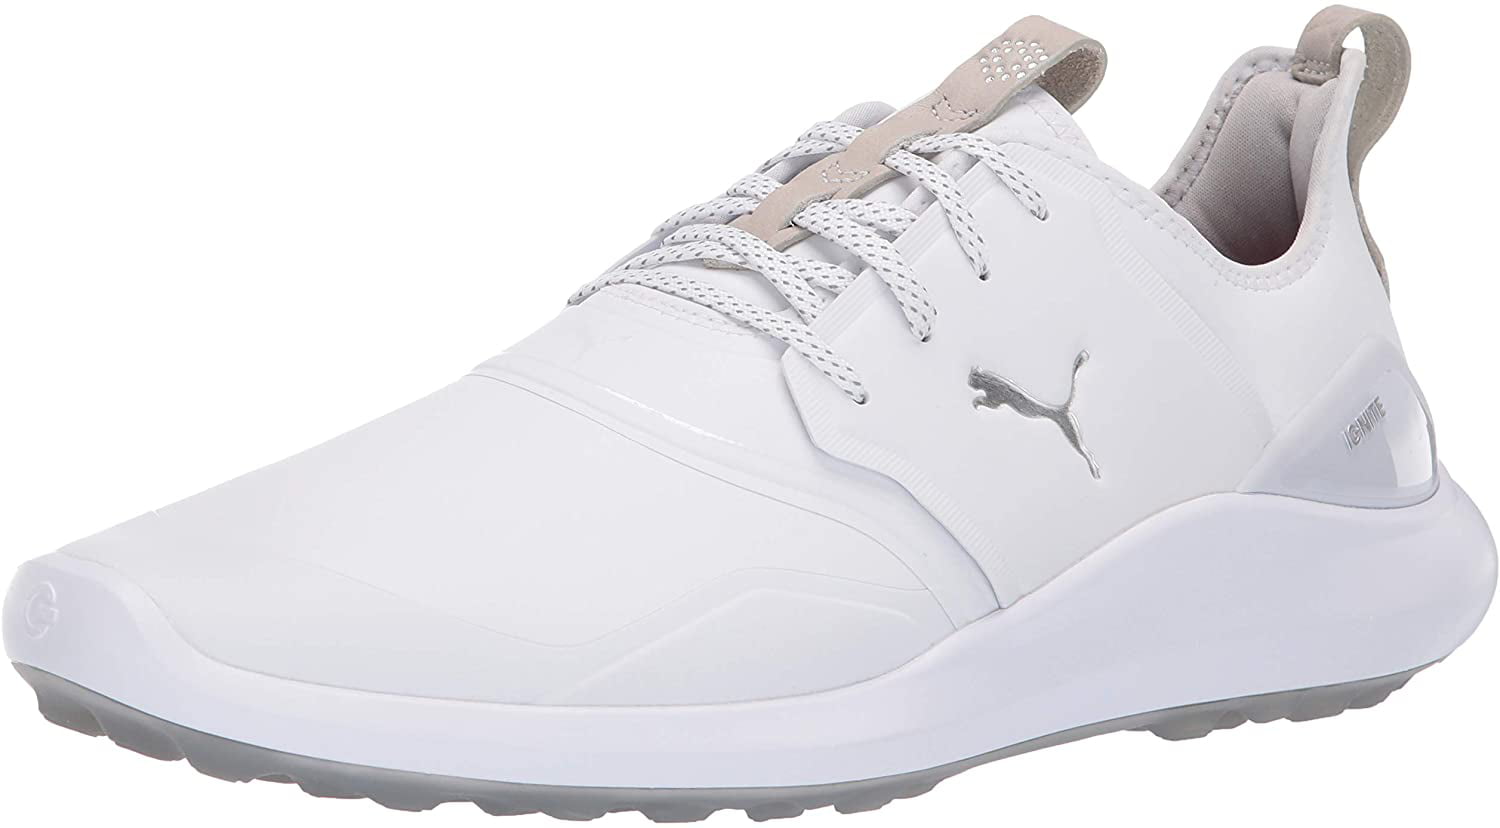 PUMA Men's Ignite Nxt Pro Golf Shoe 